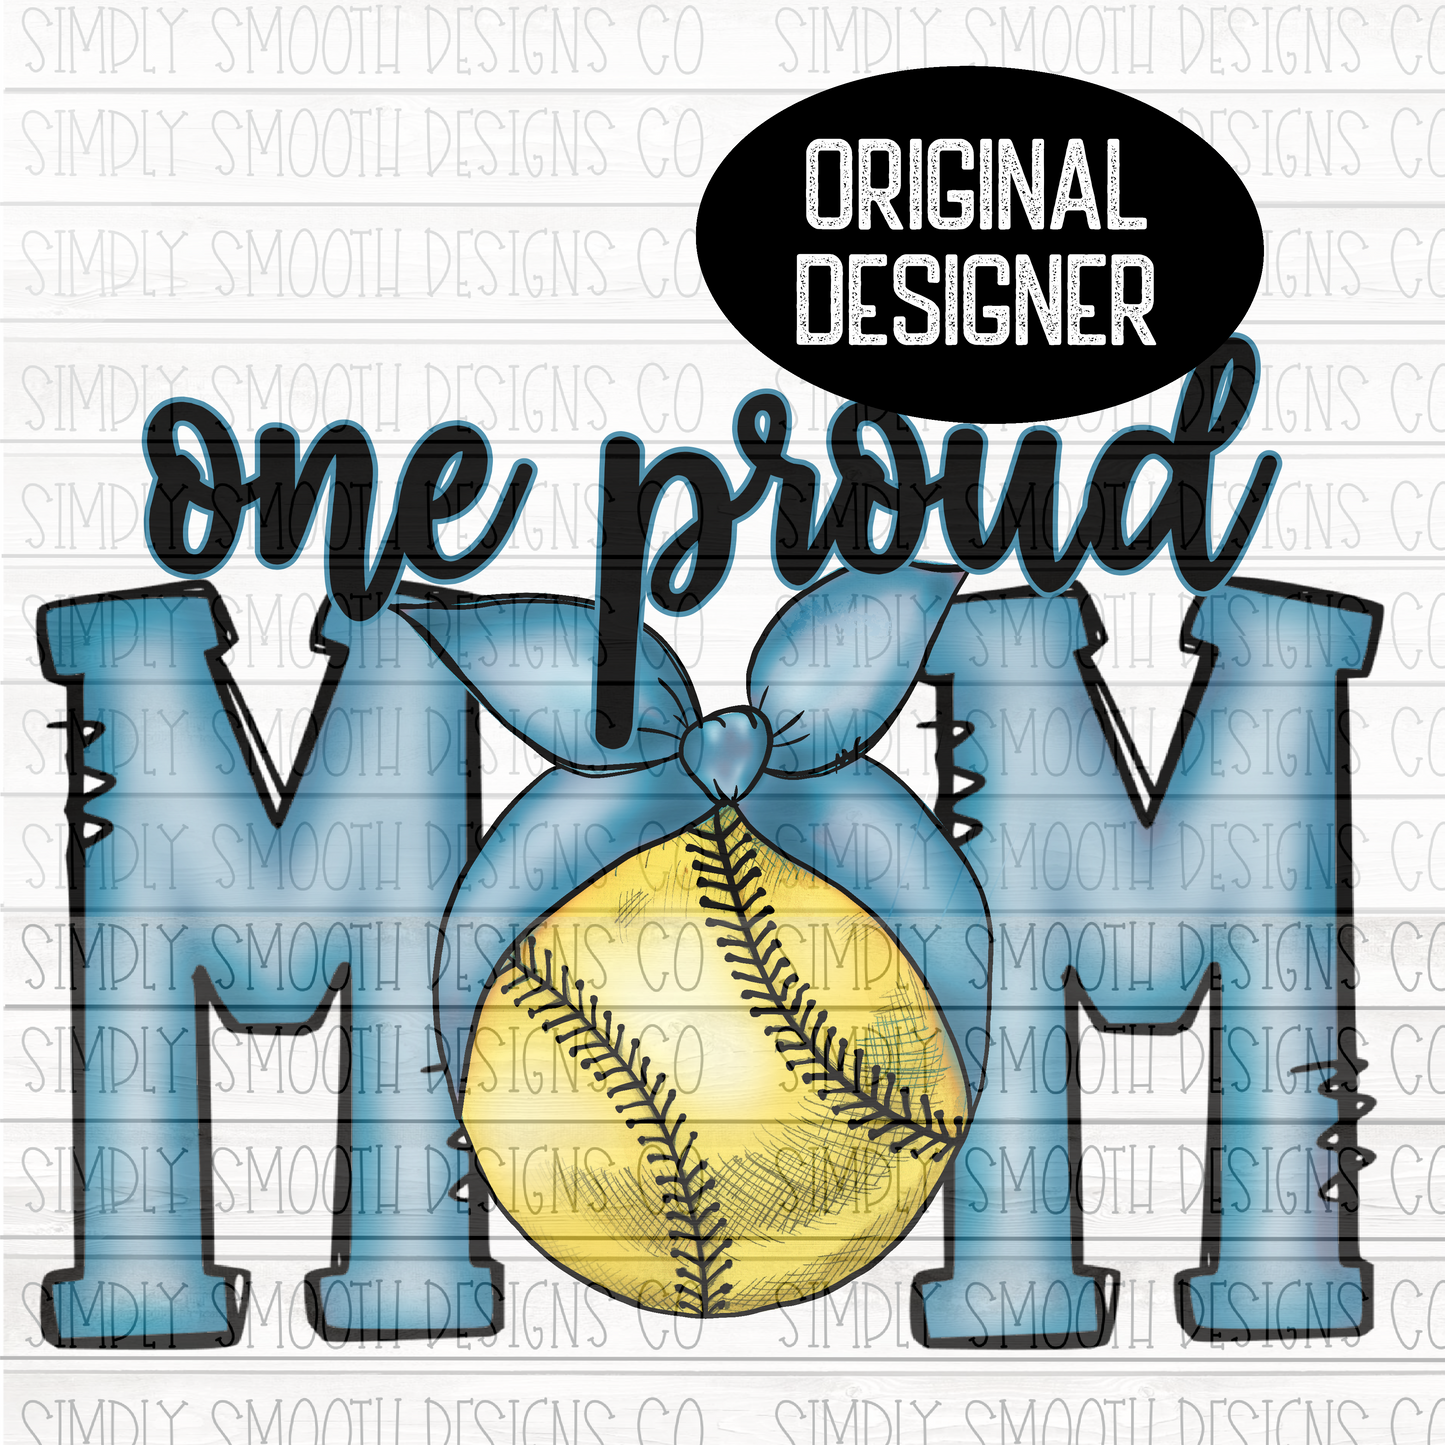 One proud Softball Mom